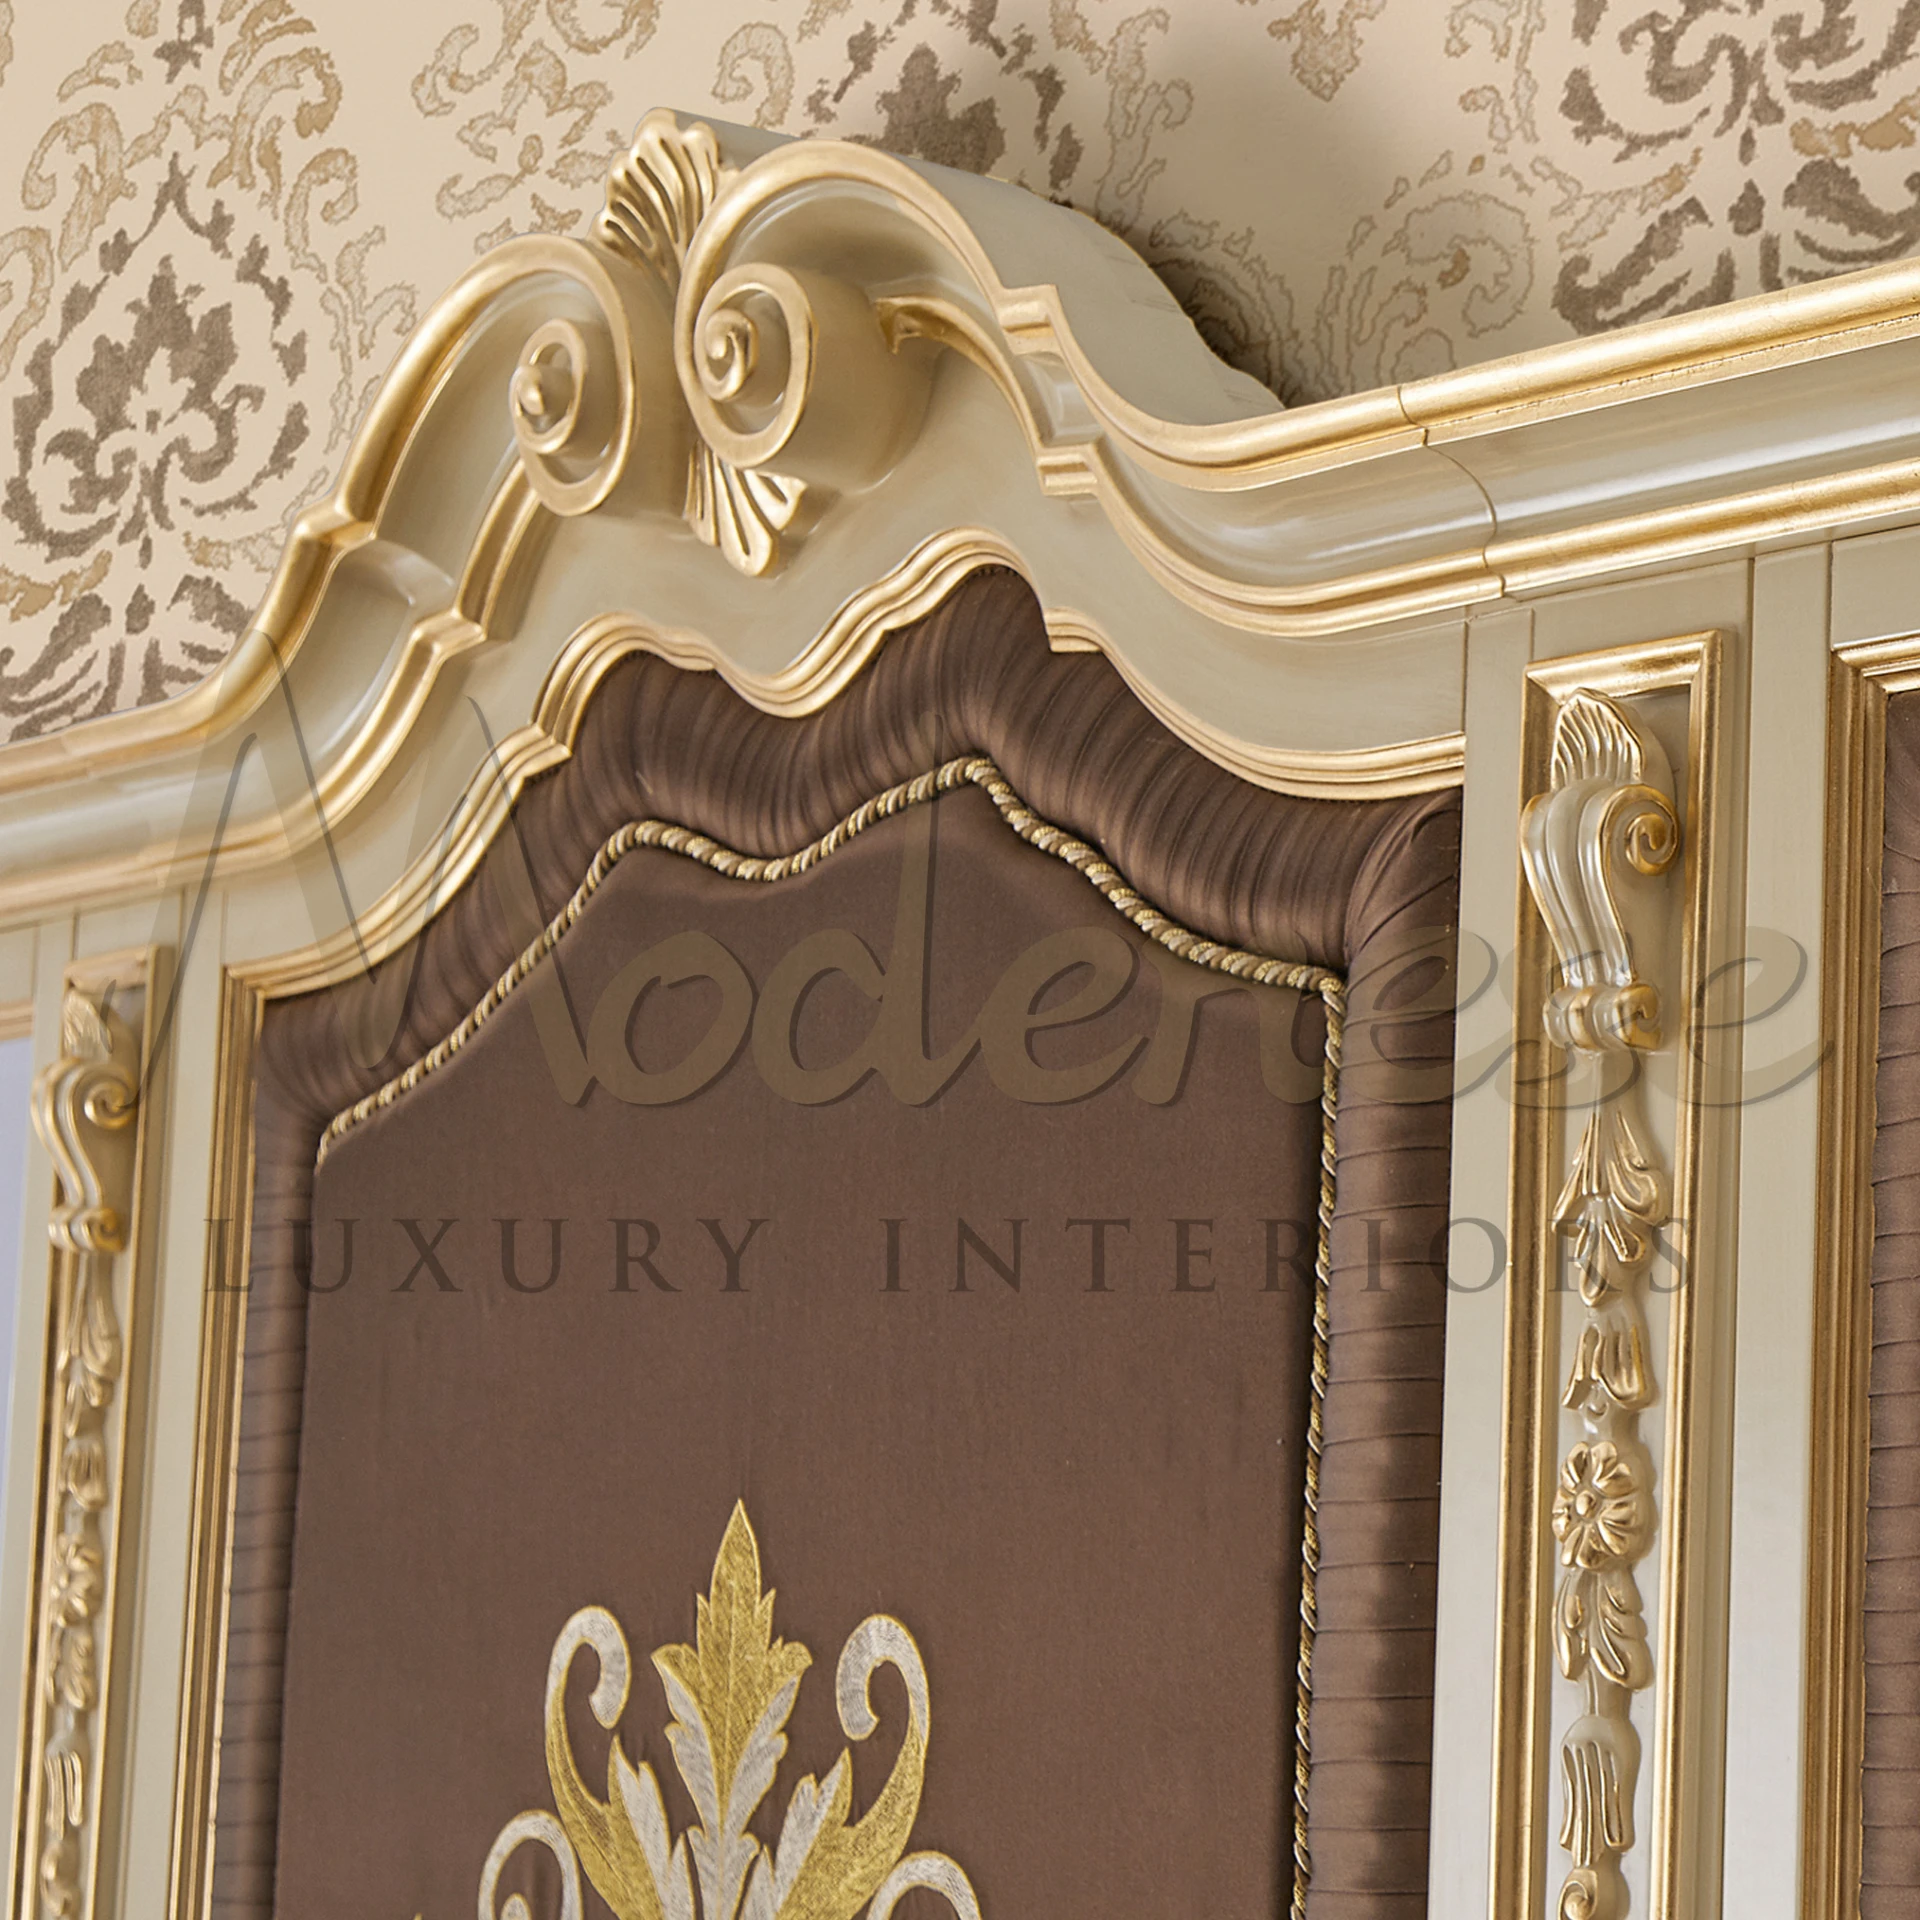 Elegant Upholstered Wall Panel, blending classic design with modern Italian craftsmanship for upscale home decor.